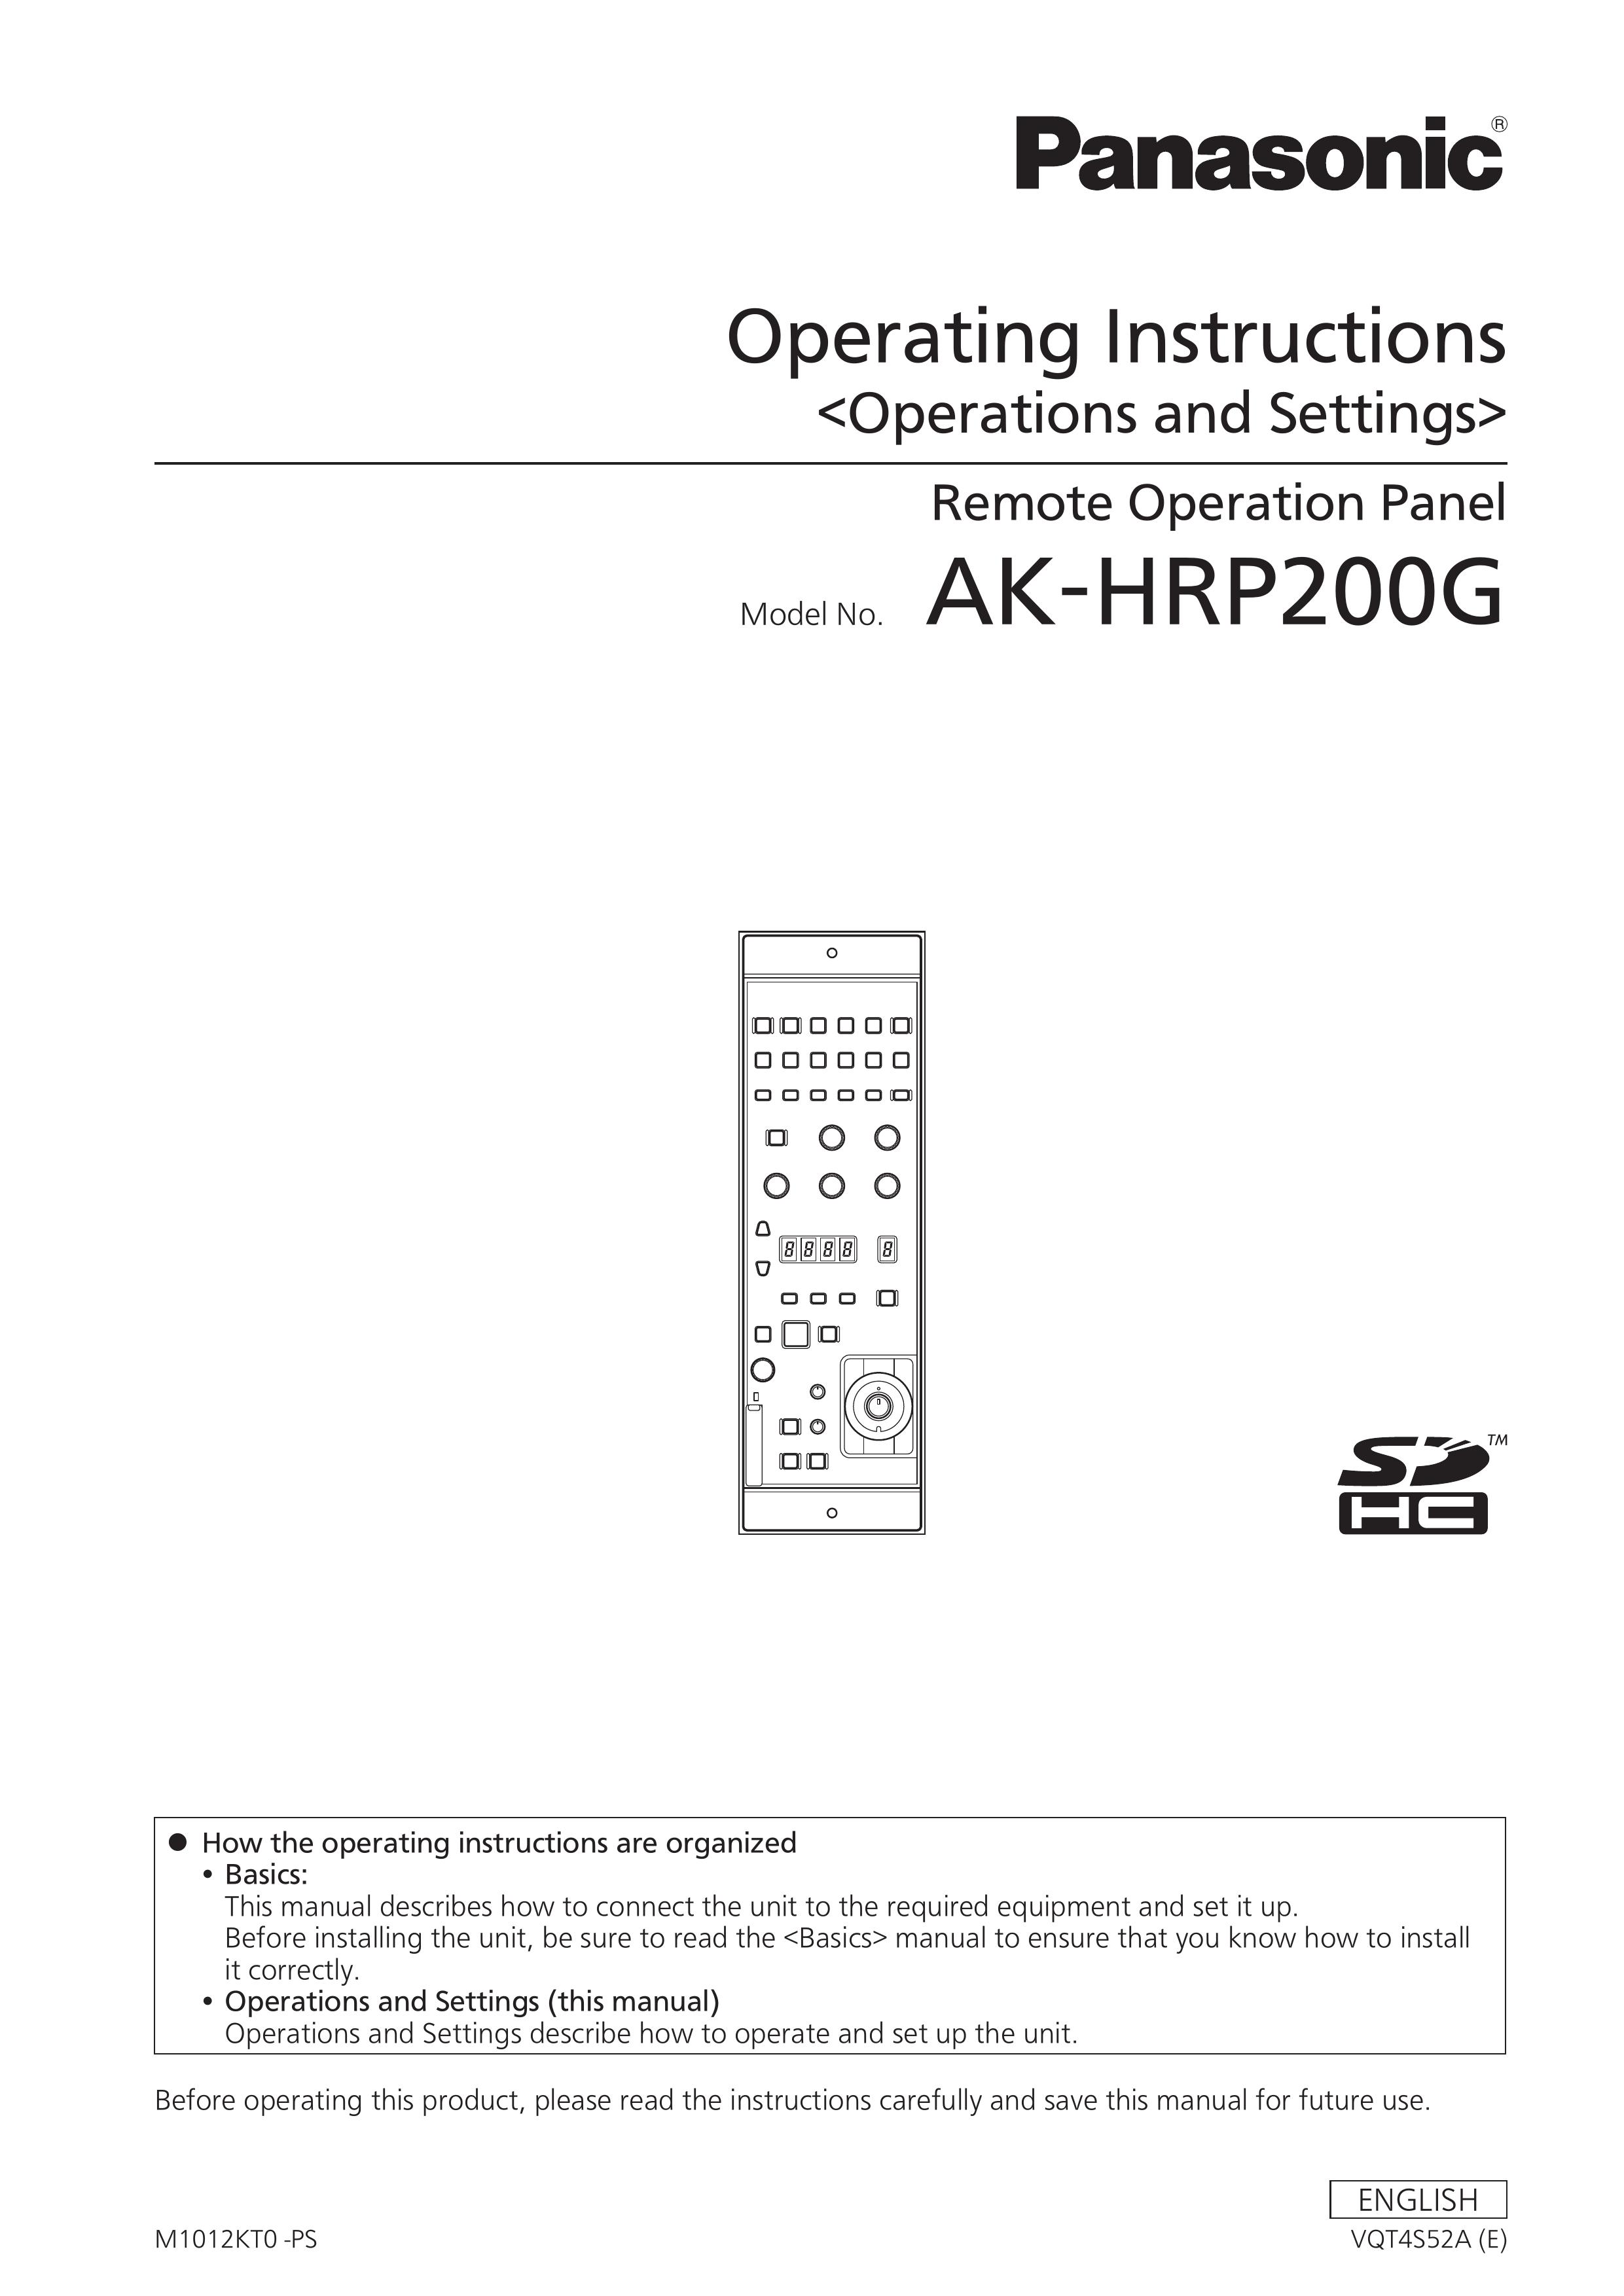 Panasonic AK-HRP200G Camera Accessories User Manual